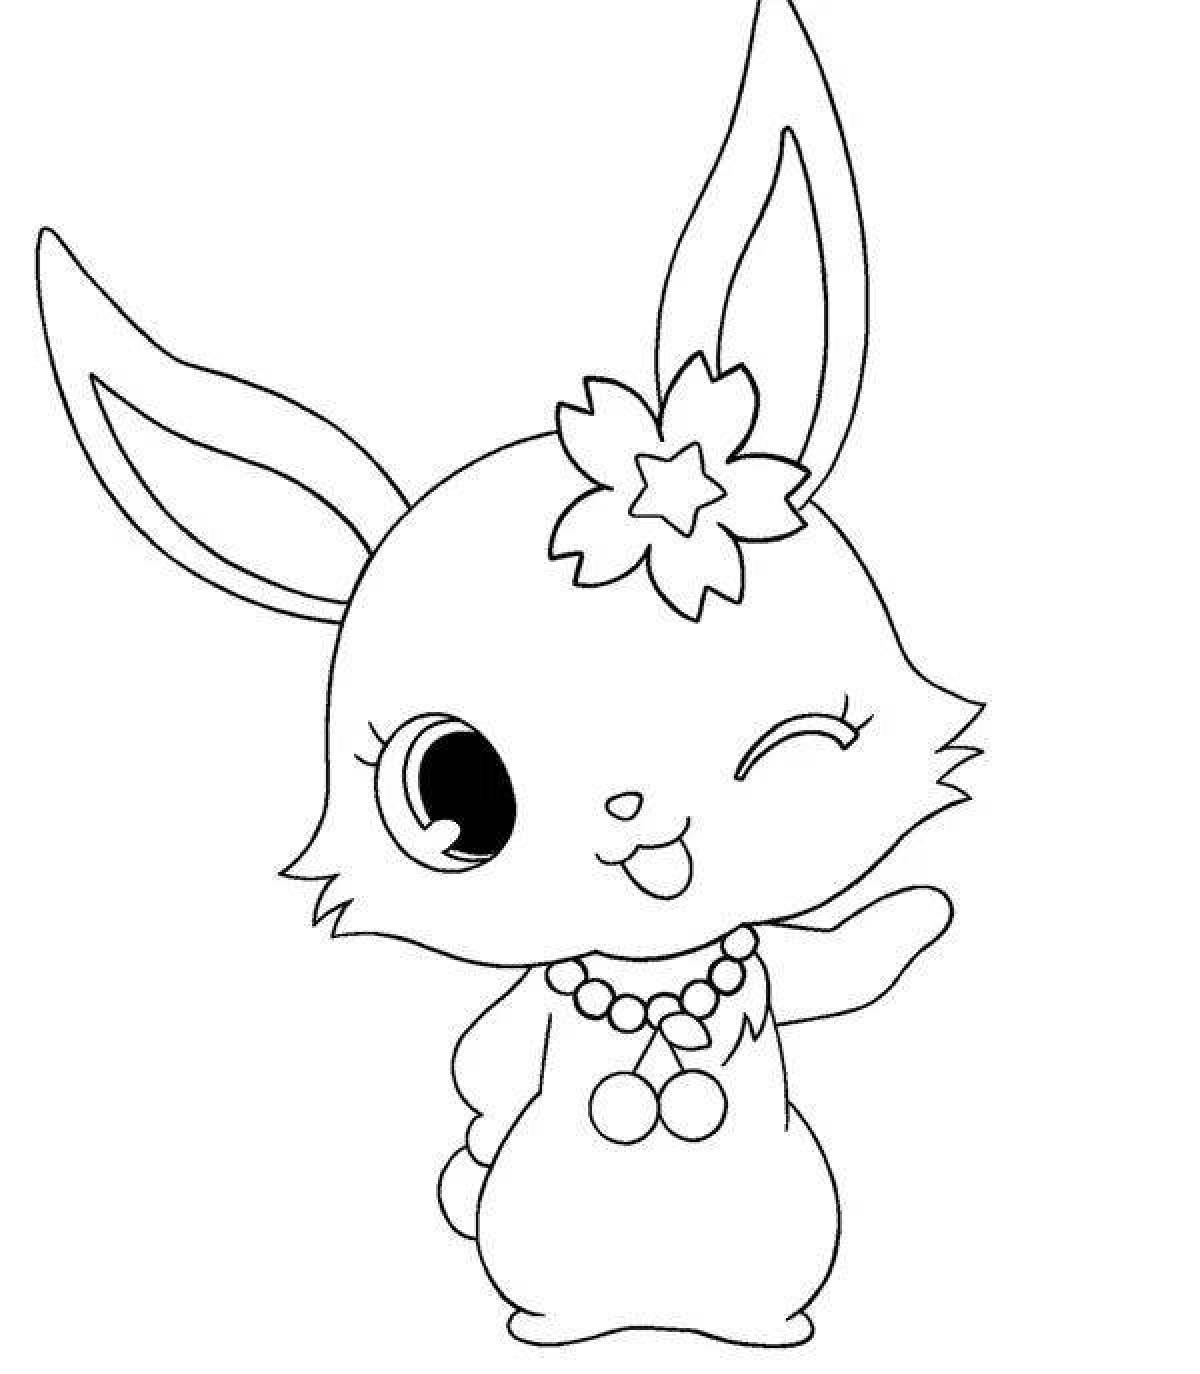 Cute and precious rabbit coloring book